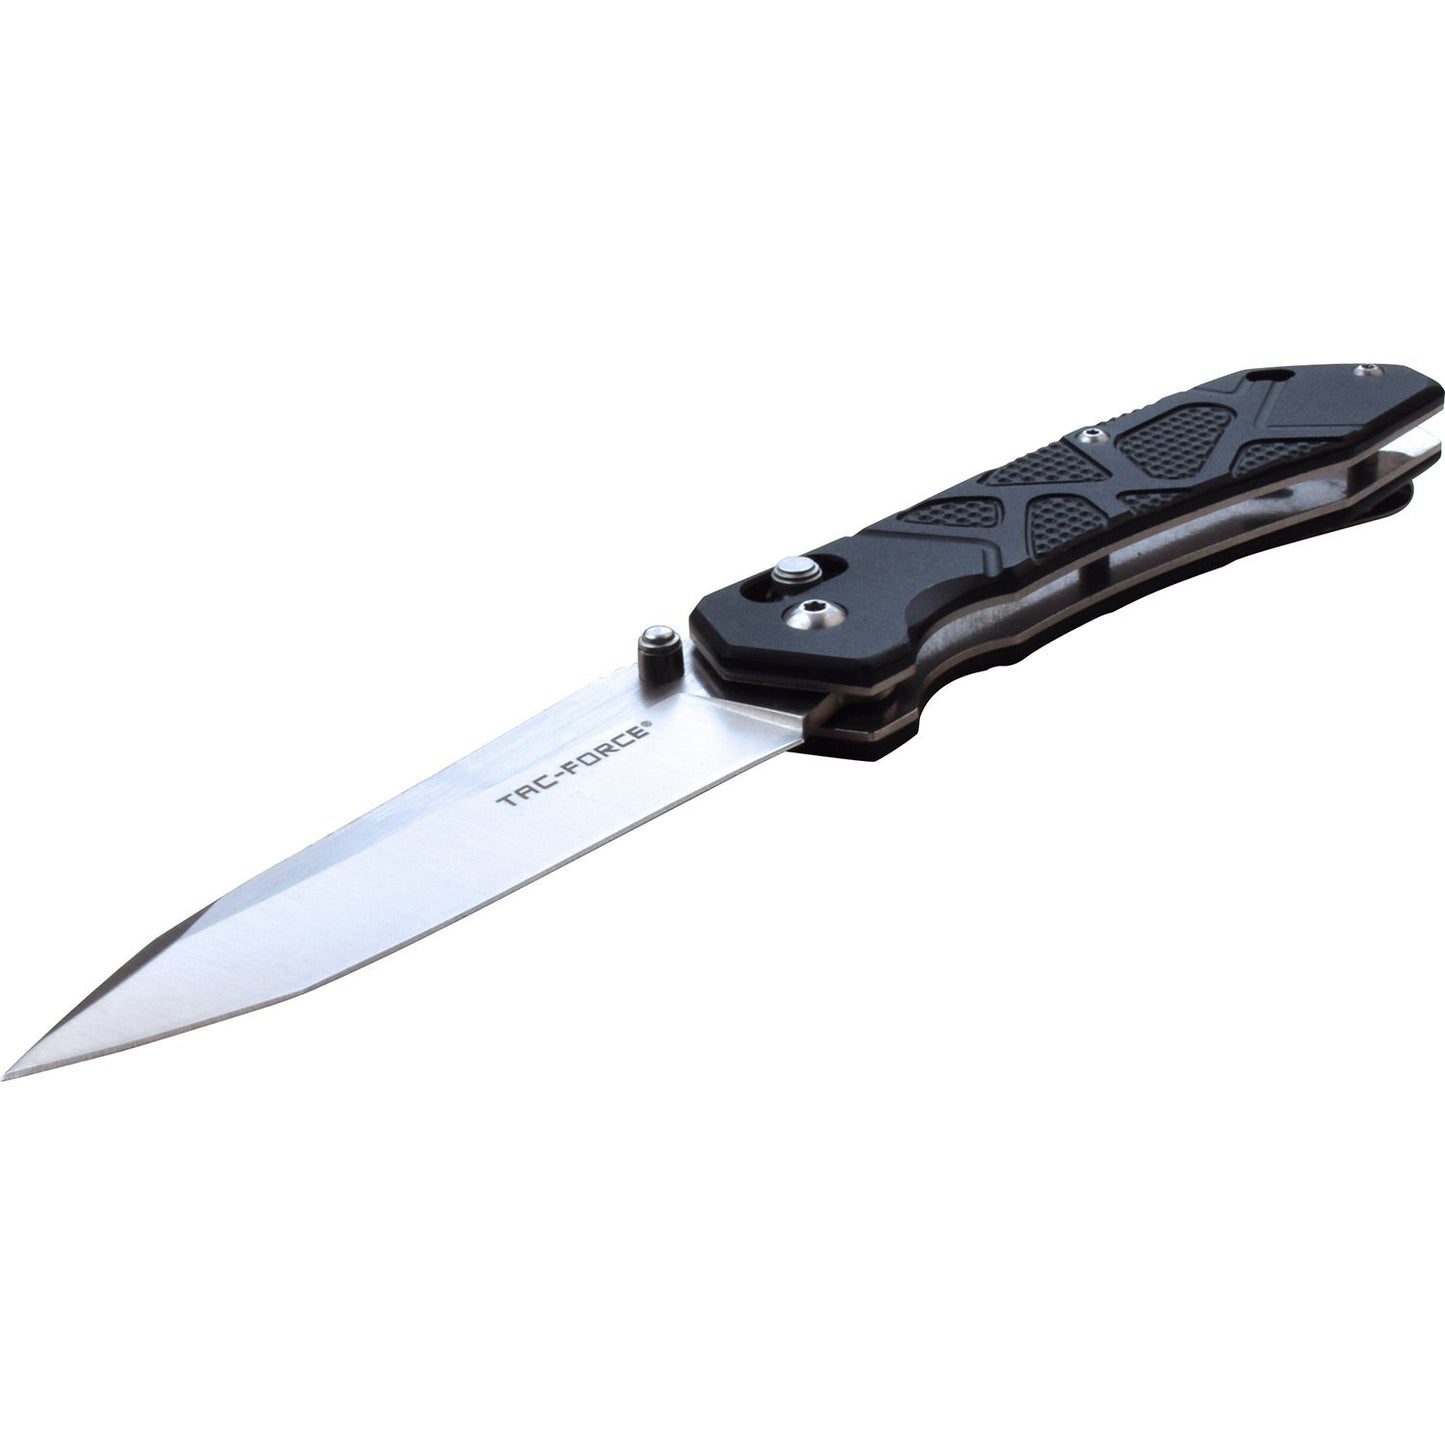 Tac-Force Tac-Force 8 Inch Hunting Tanto Manual Folding Knife - Black #tf-1031Bk Black